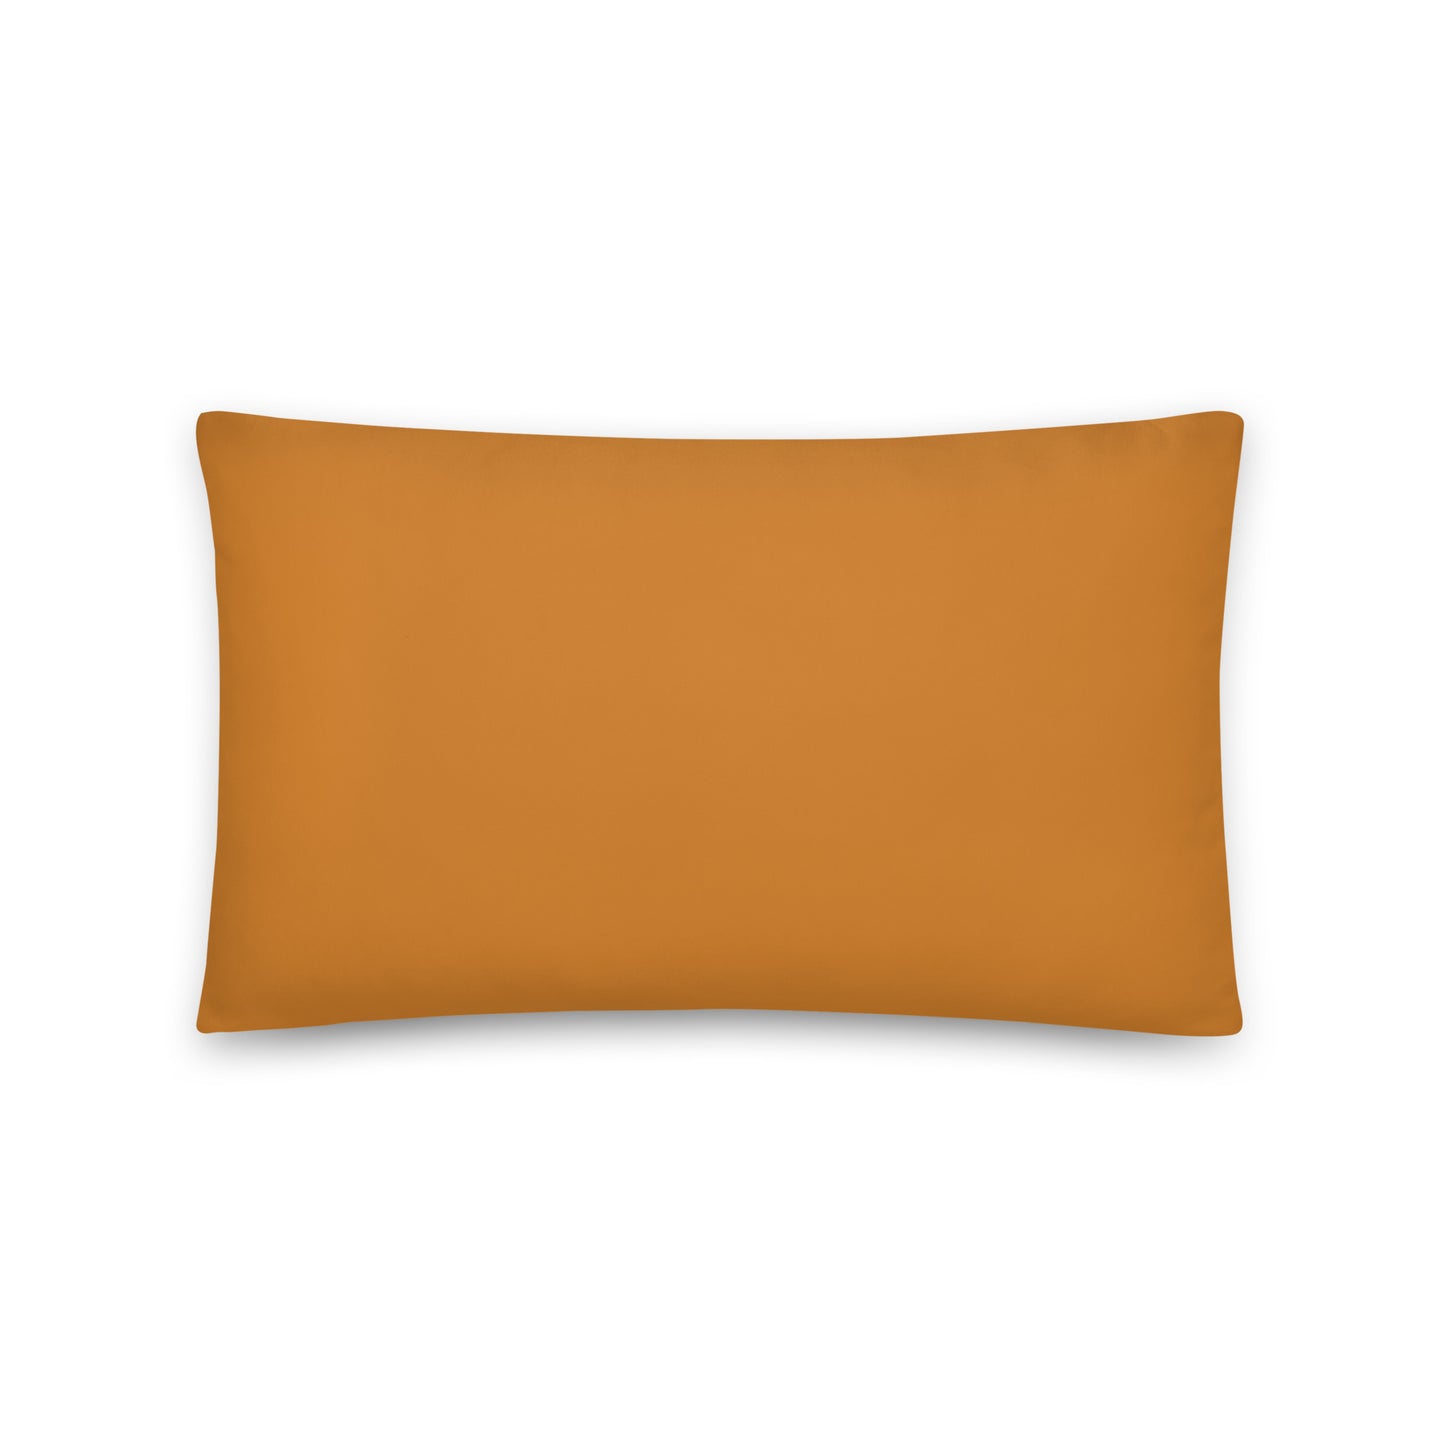 Sydney Opera Abstract Pillow